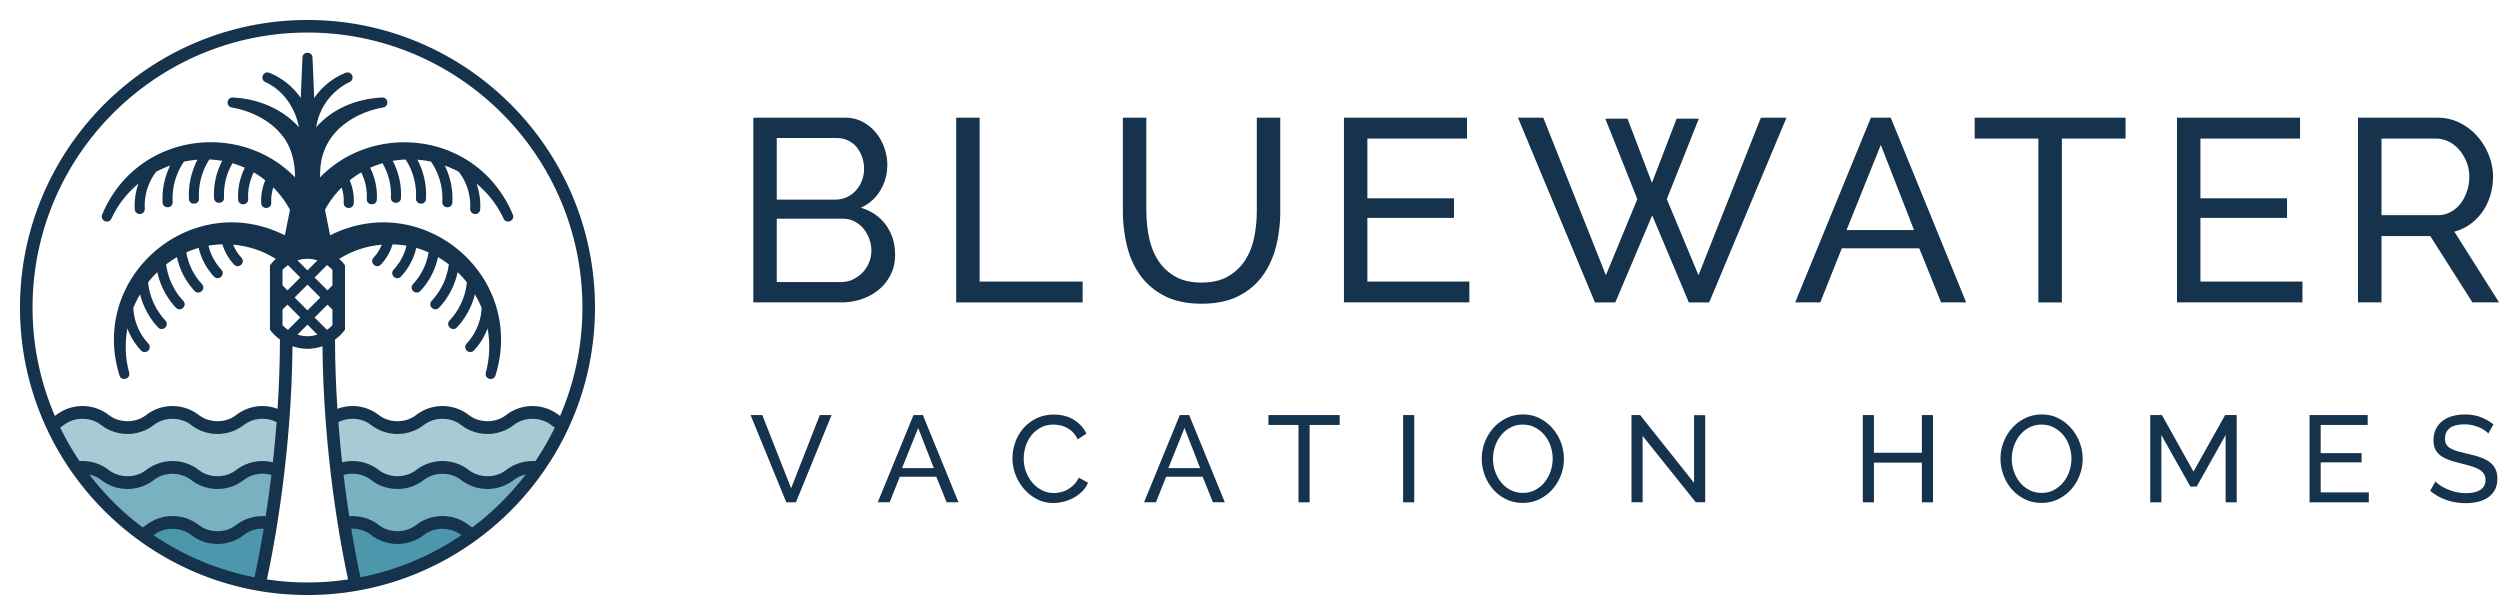 Bluewater logo horizontal color 1